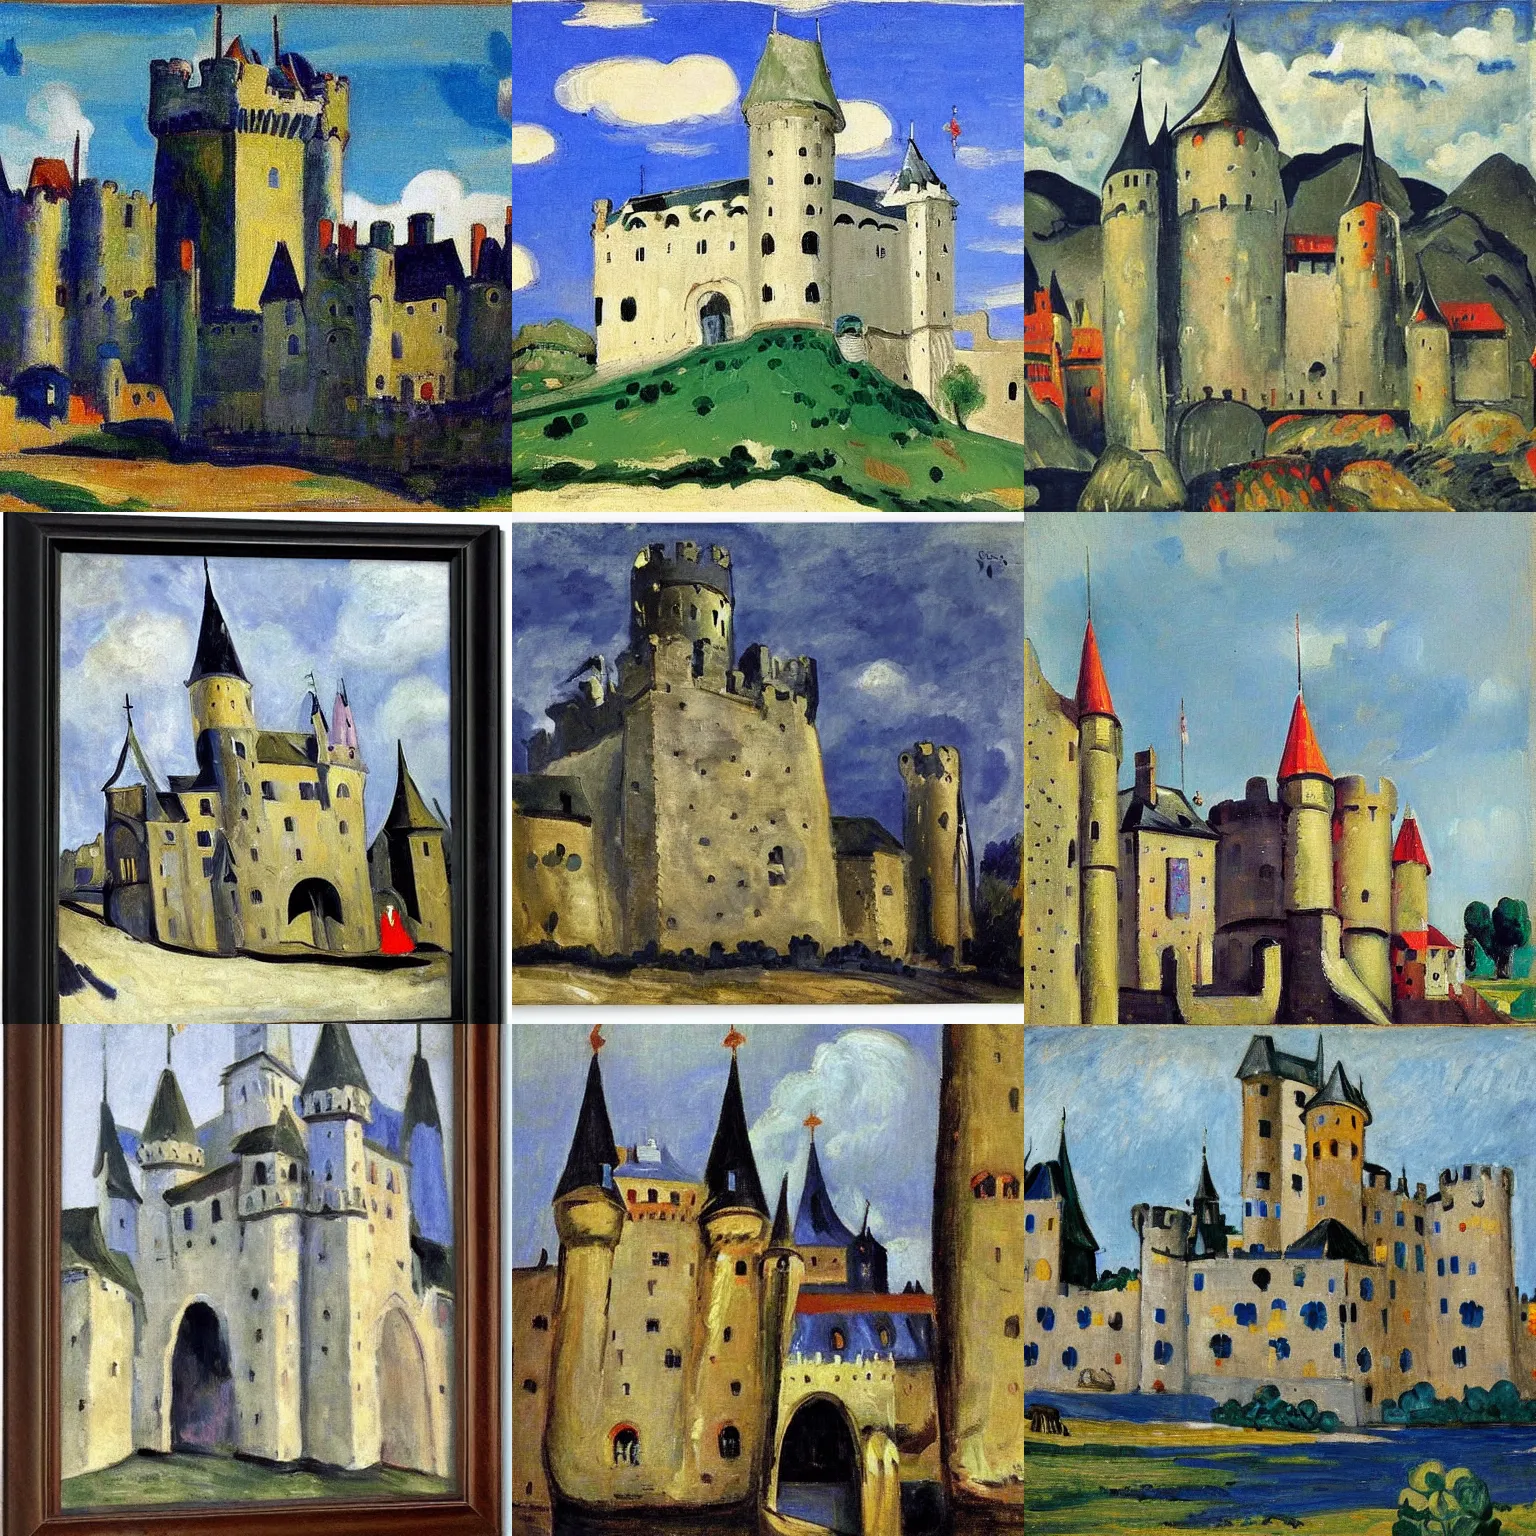 Prompt: medieval castle, by kees van dongen